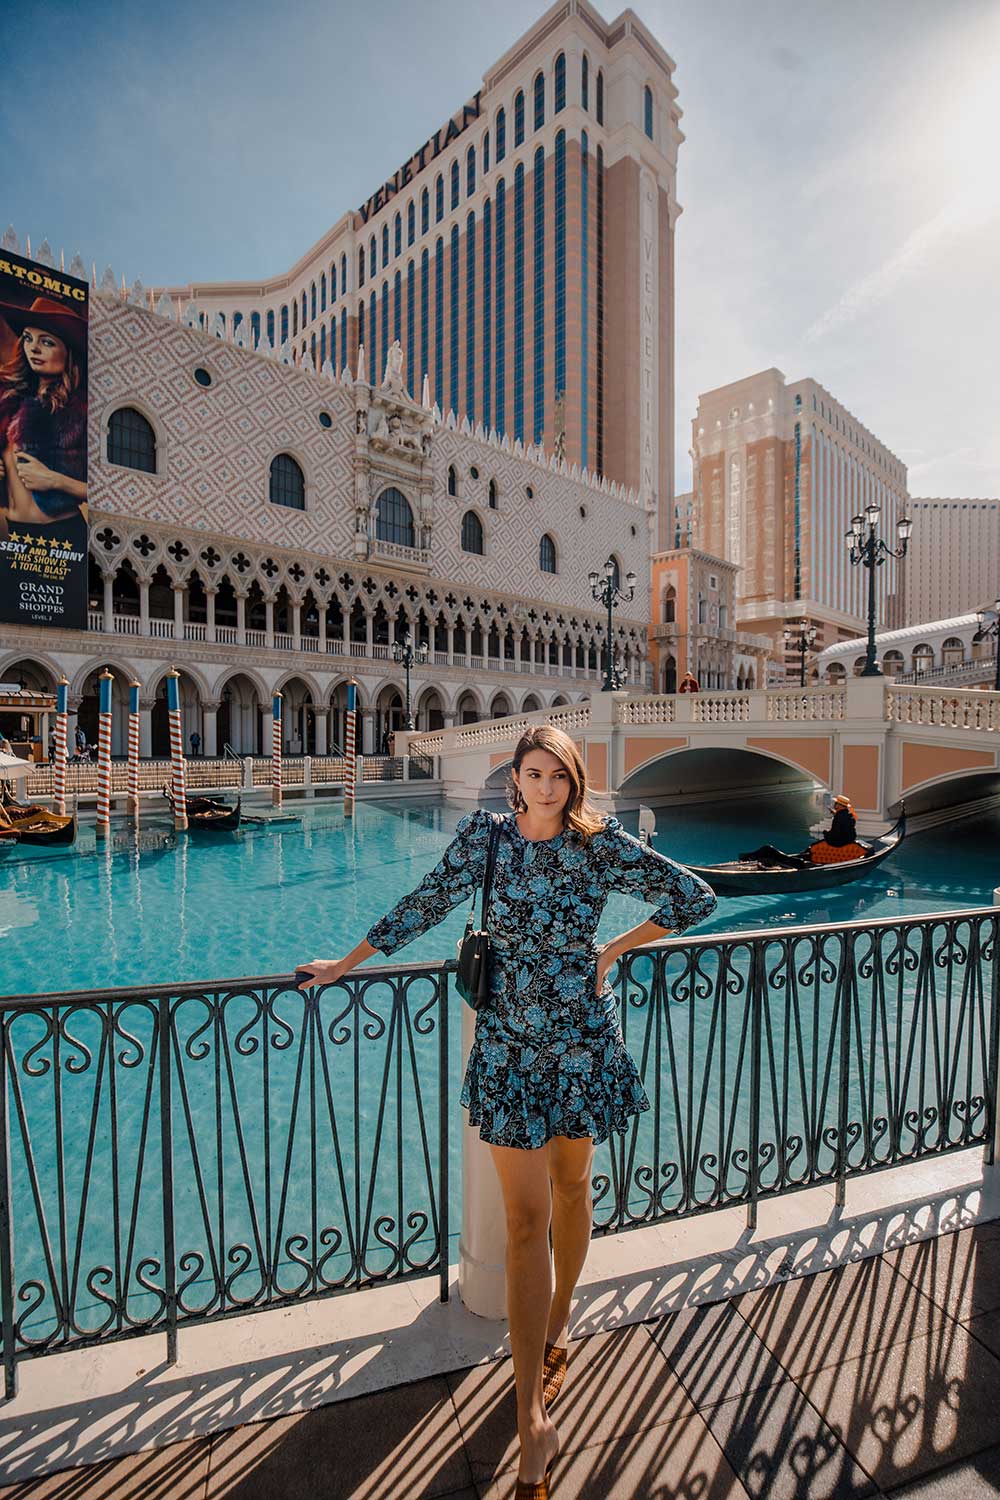 Gondola Rides at the Venetian Las Vegas